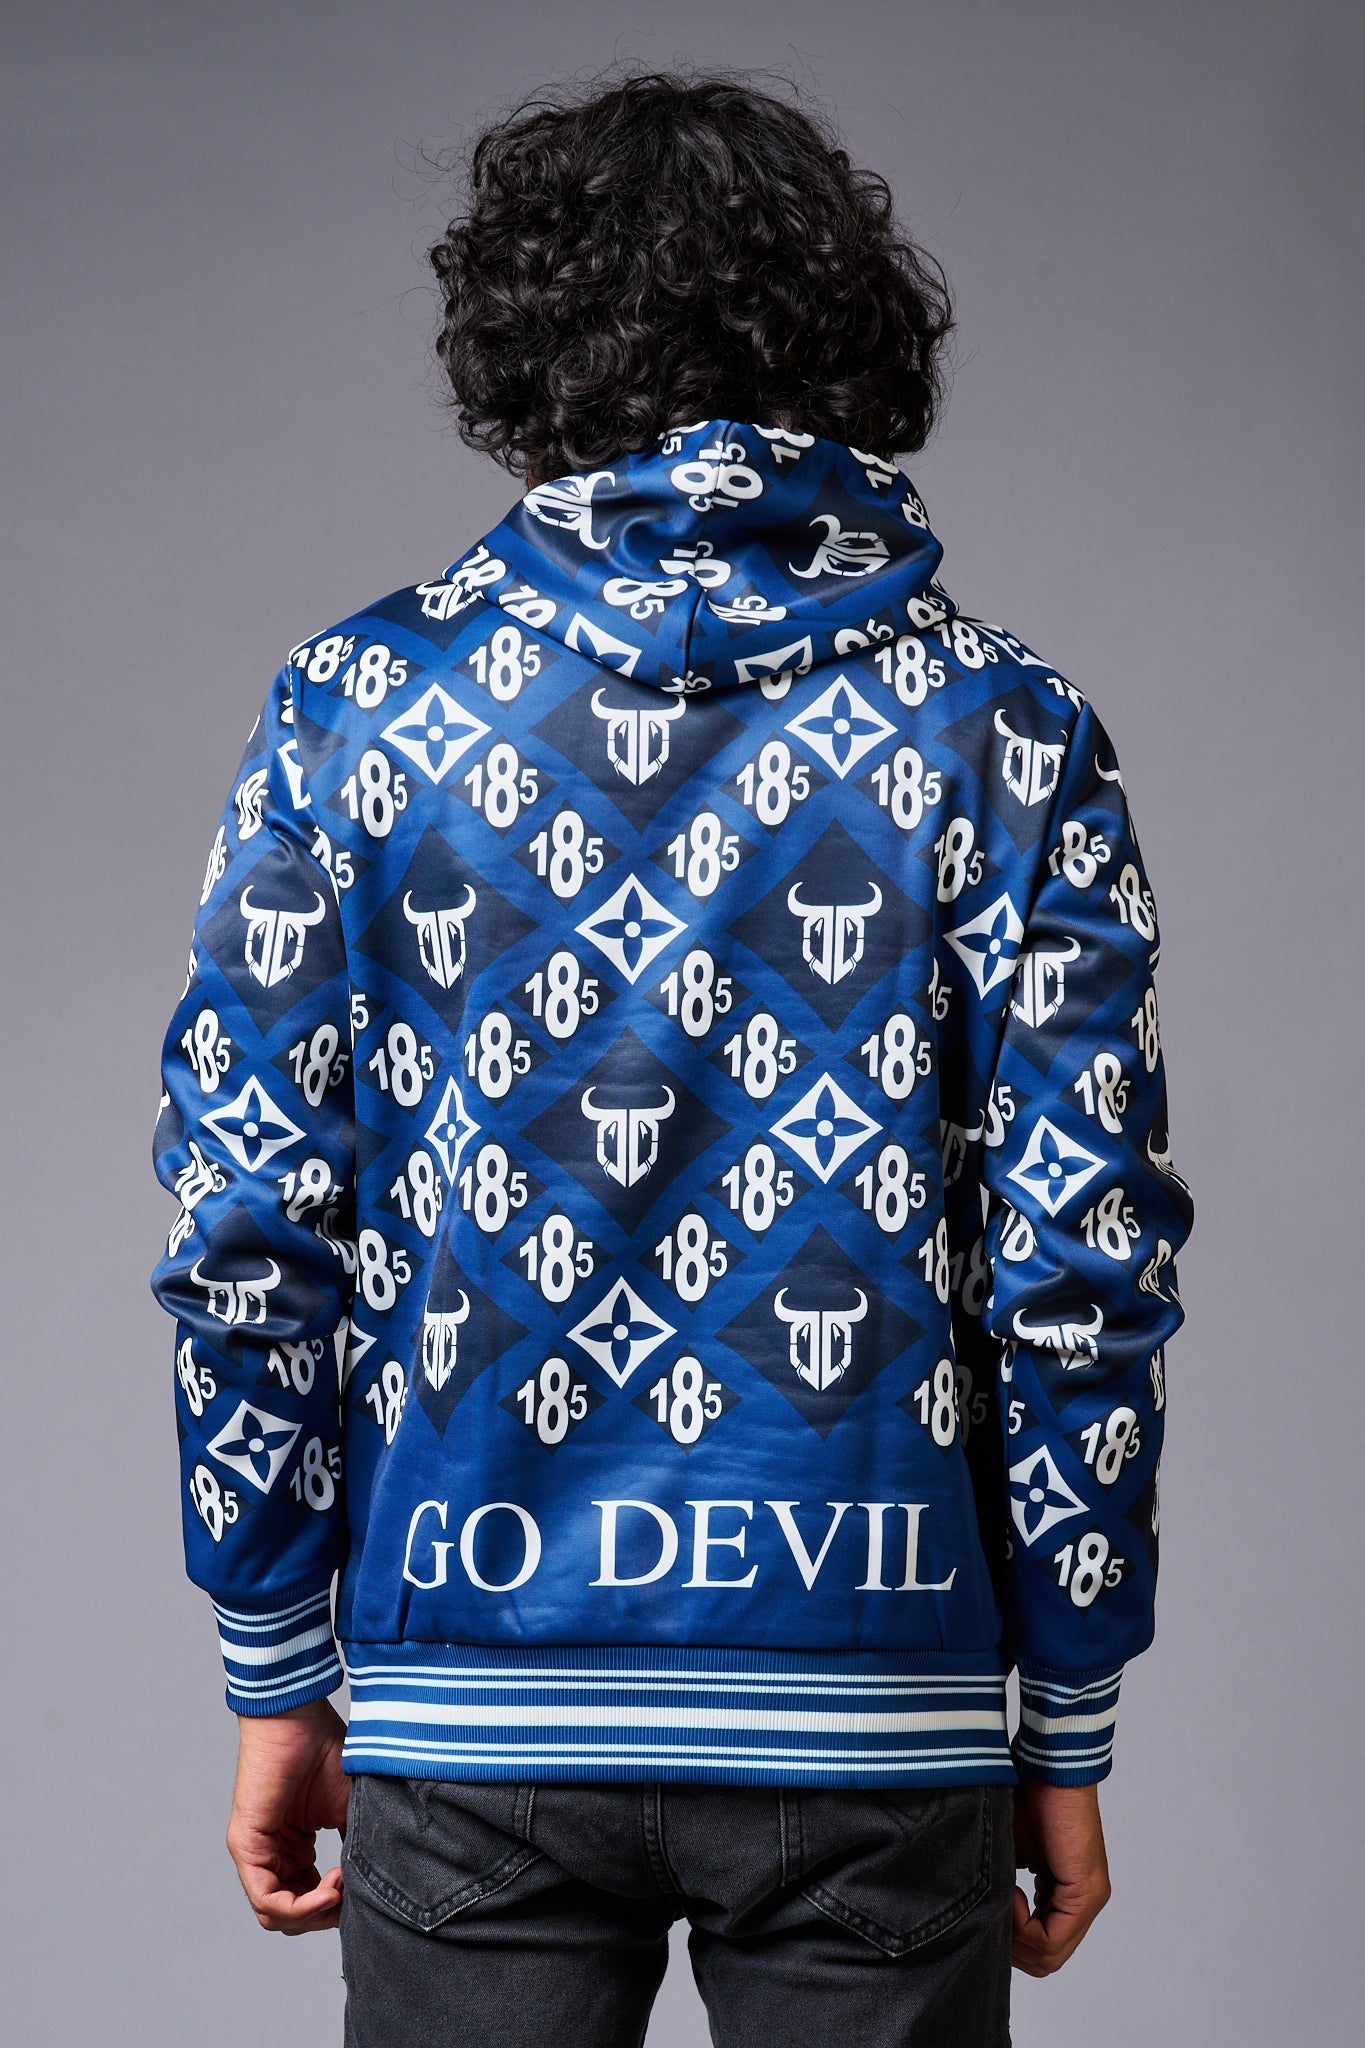 185 GD Logo Printed Blue Hoodie for Men - Go Devil